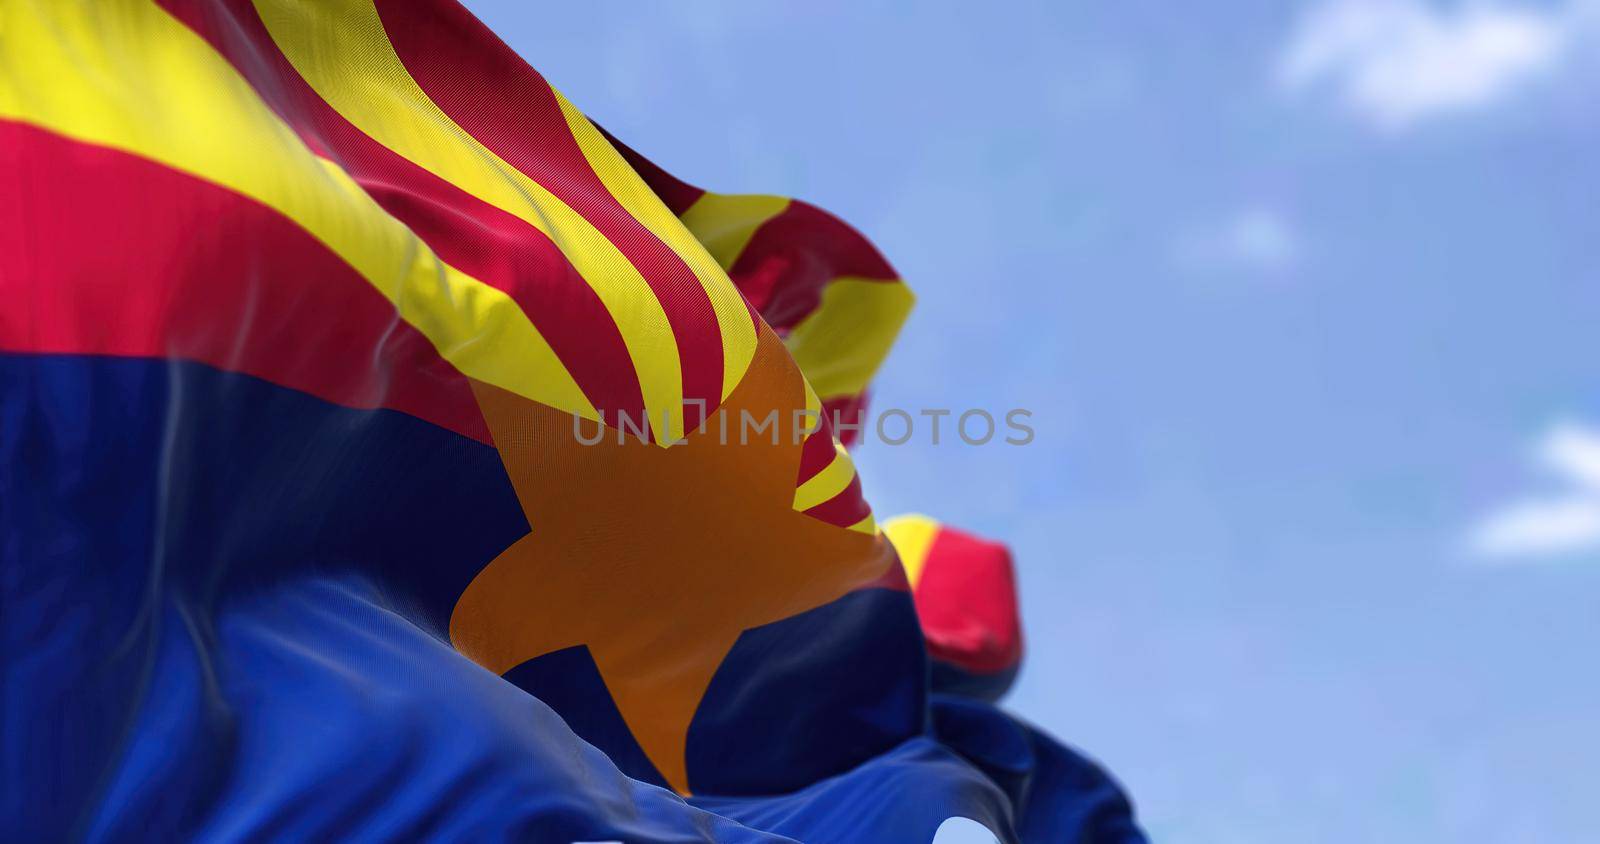 The state flag of Arizona waving in the wind by rarrarorro